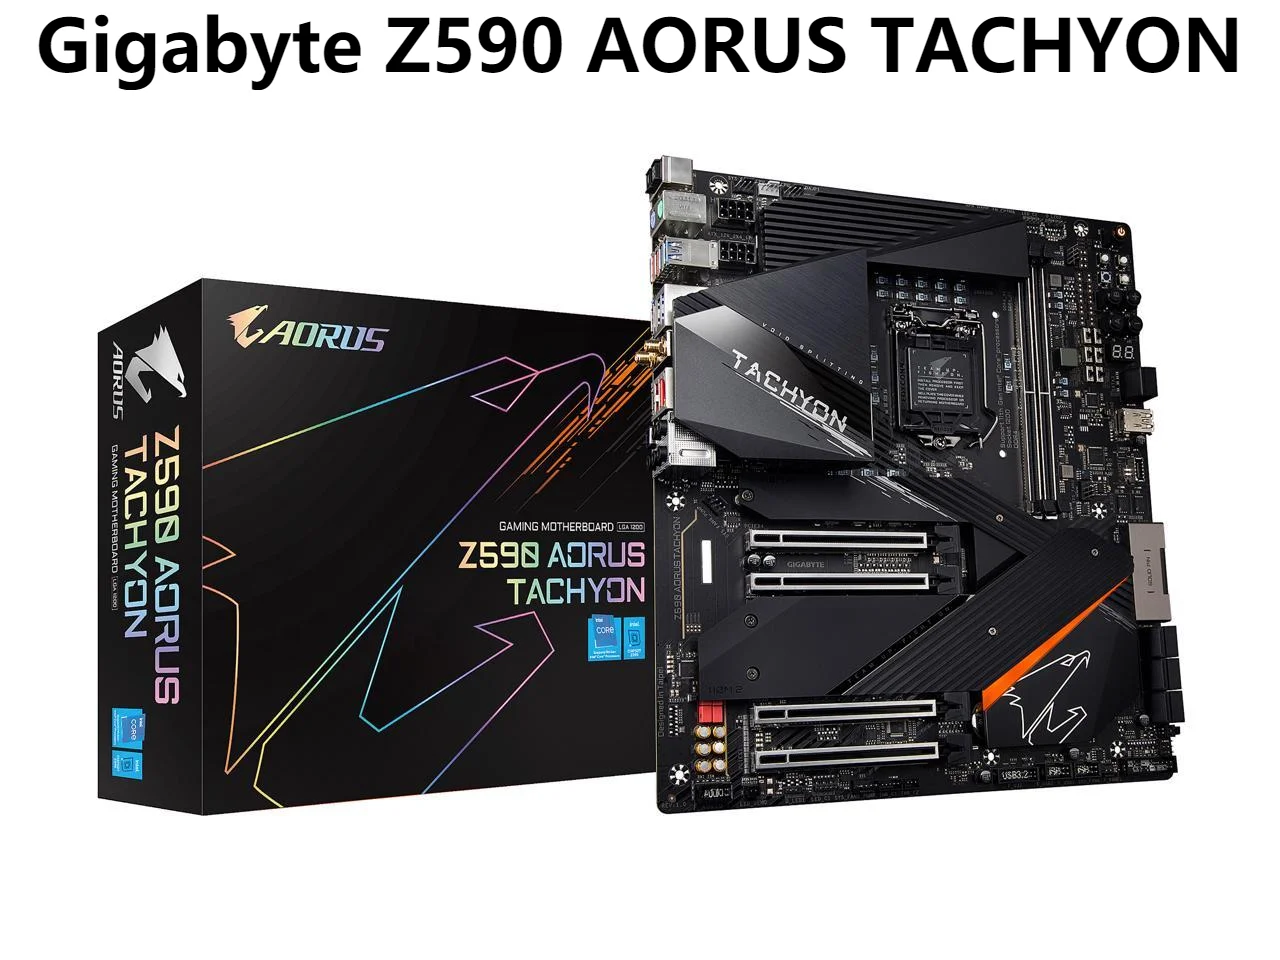 

Gigabyte Z590 AORUS TACHYON Motherboard LGA 1200 Support Intel 10th/11th Gen CPU 64GB PCI-E 4.0 Intel Z590 Mainboard DDR4 ATX